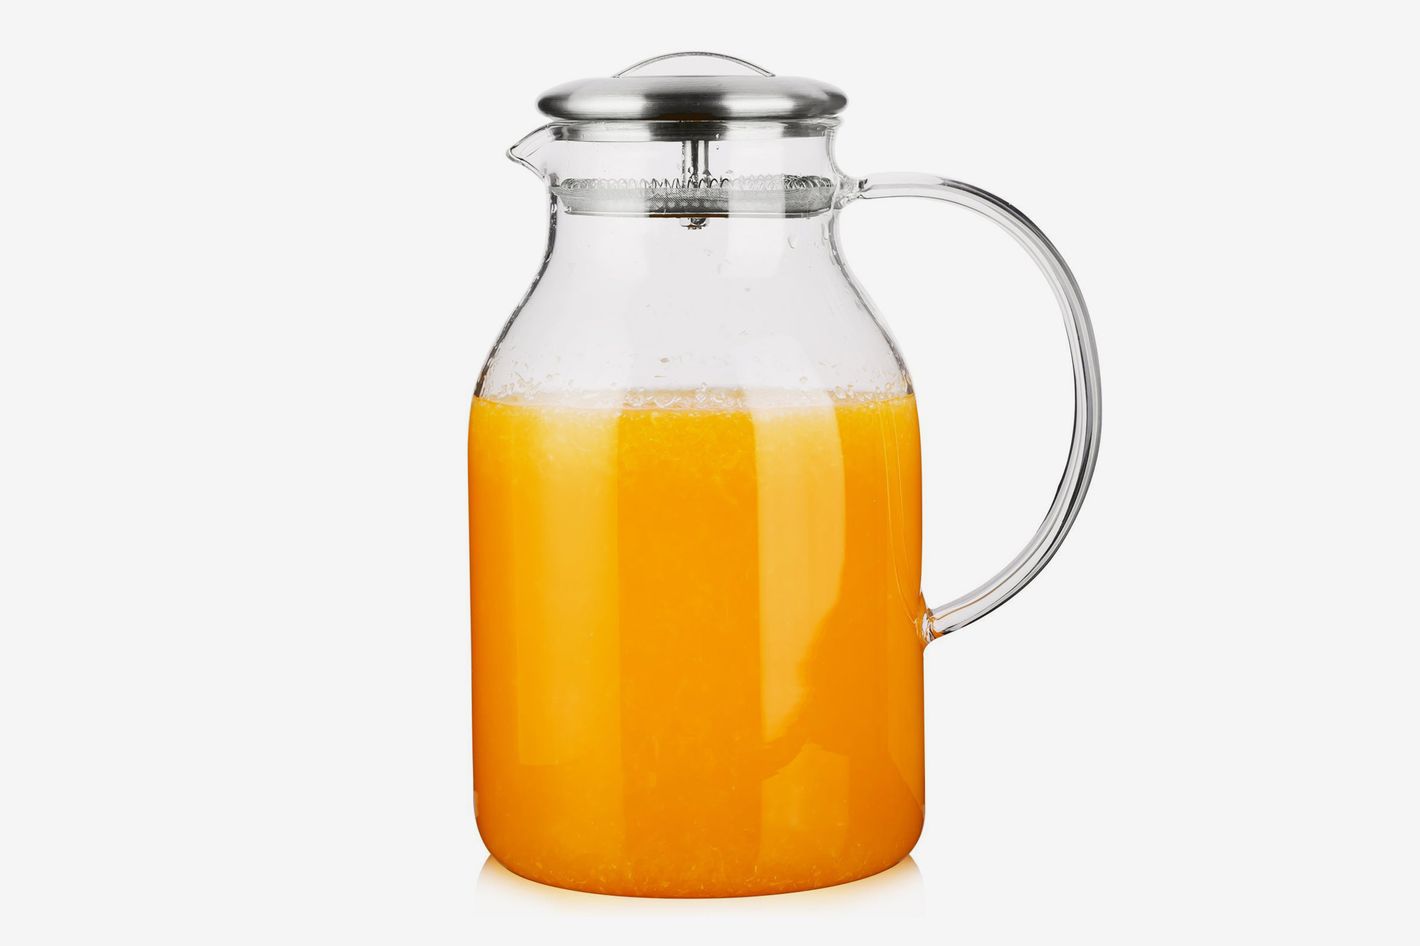 2 x Acrylic Carafe with Lid Pitcher Water Ice Tea Juice Beverage Fruit jug 1.5L 